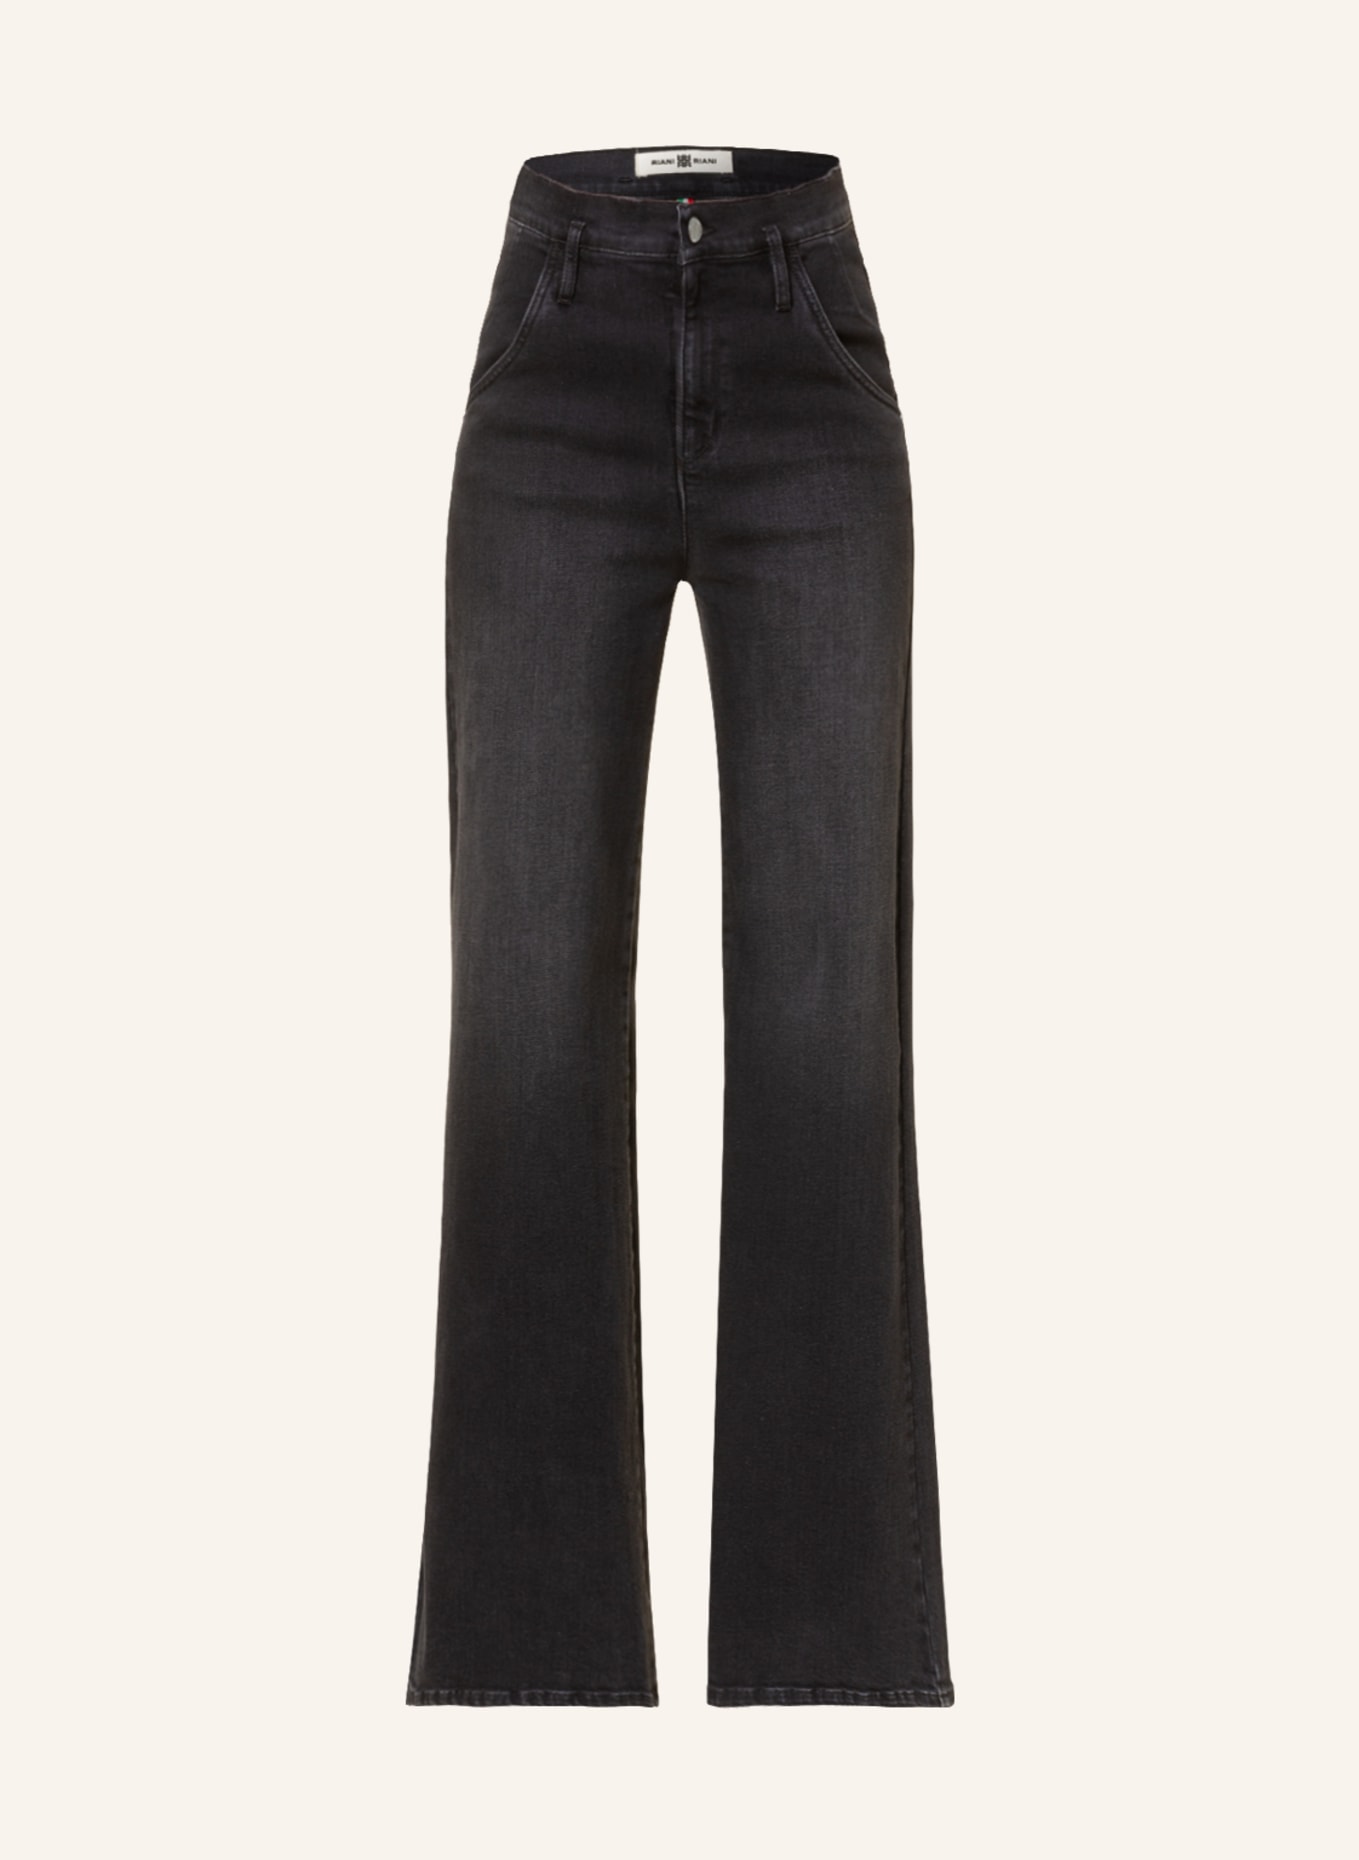 RIANI Flared Jeans , Farbe: 974 black used wash (Bild 1)